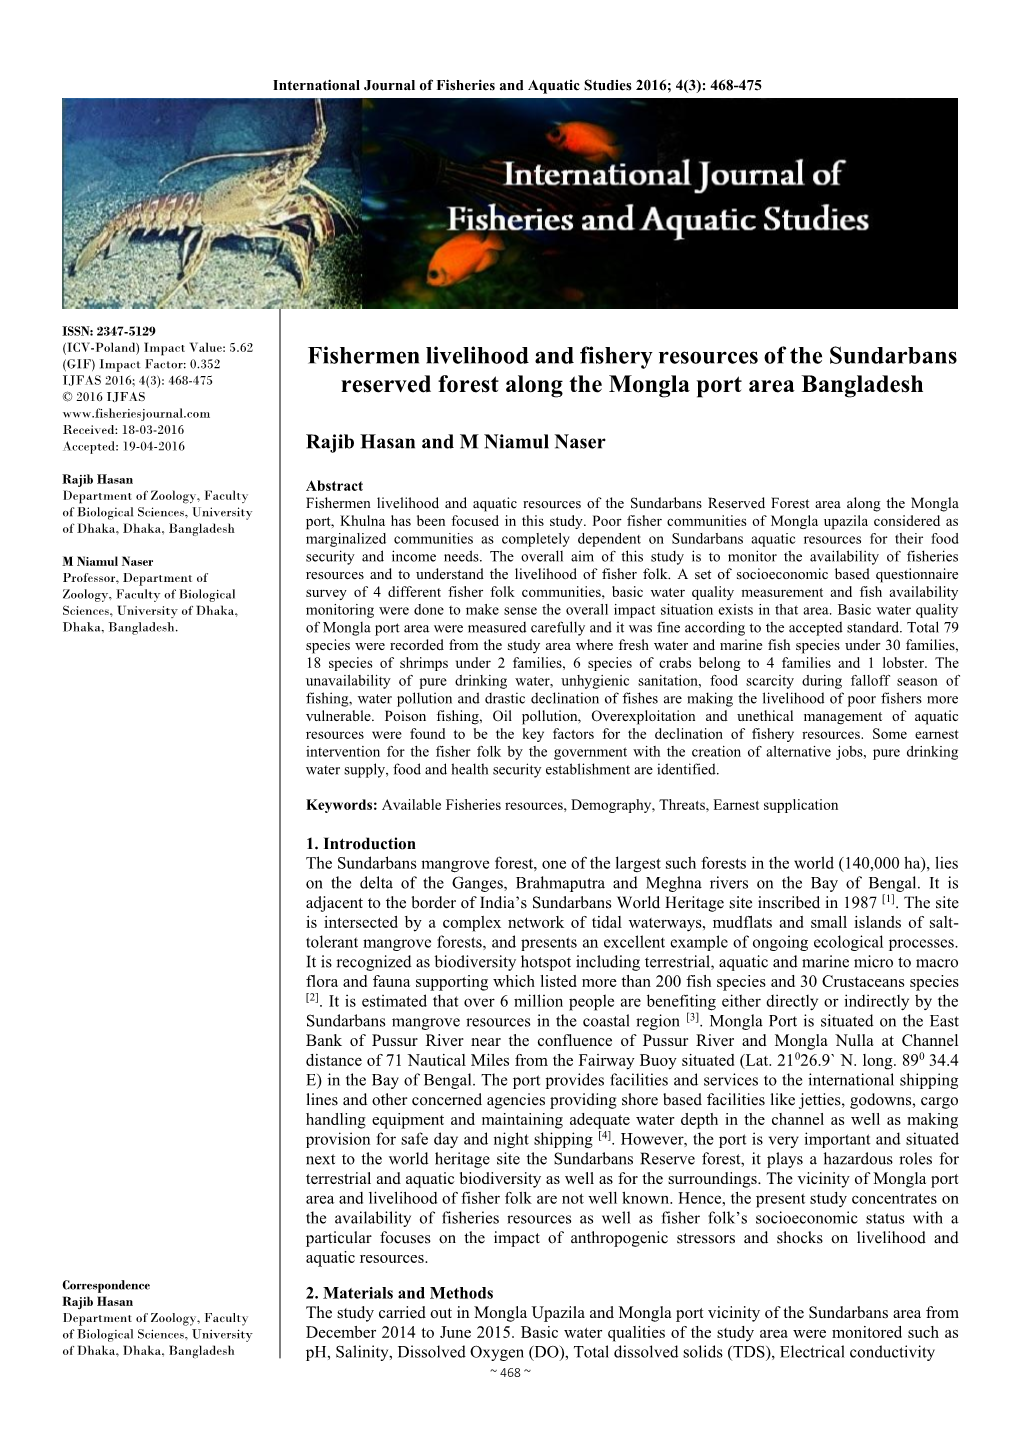 Fishermen Livelihood and Fishery Resources of the Sundarbans